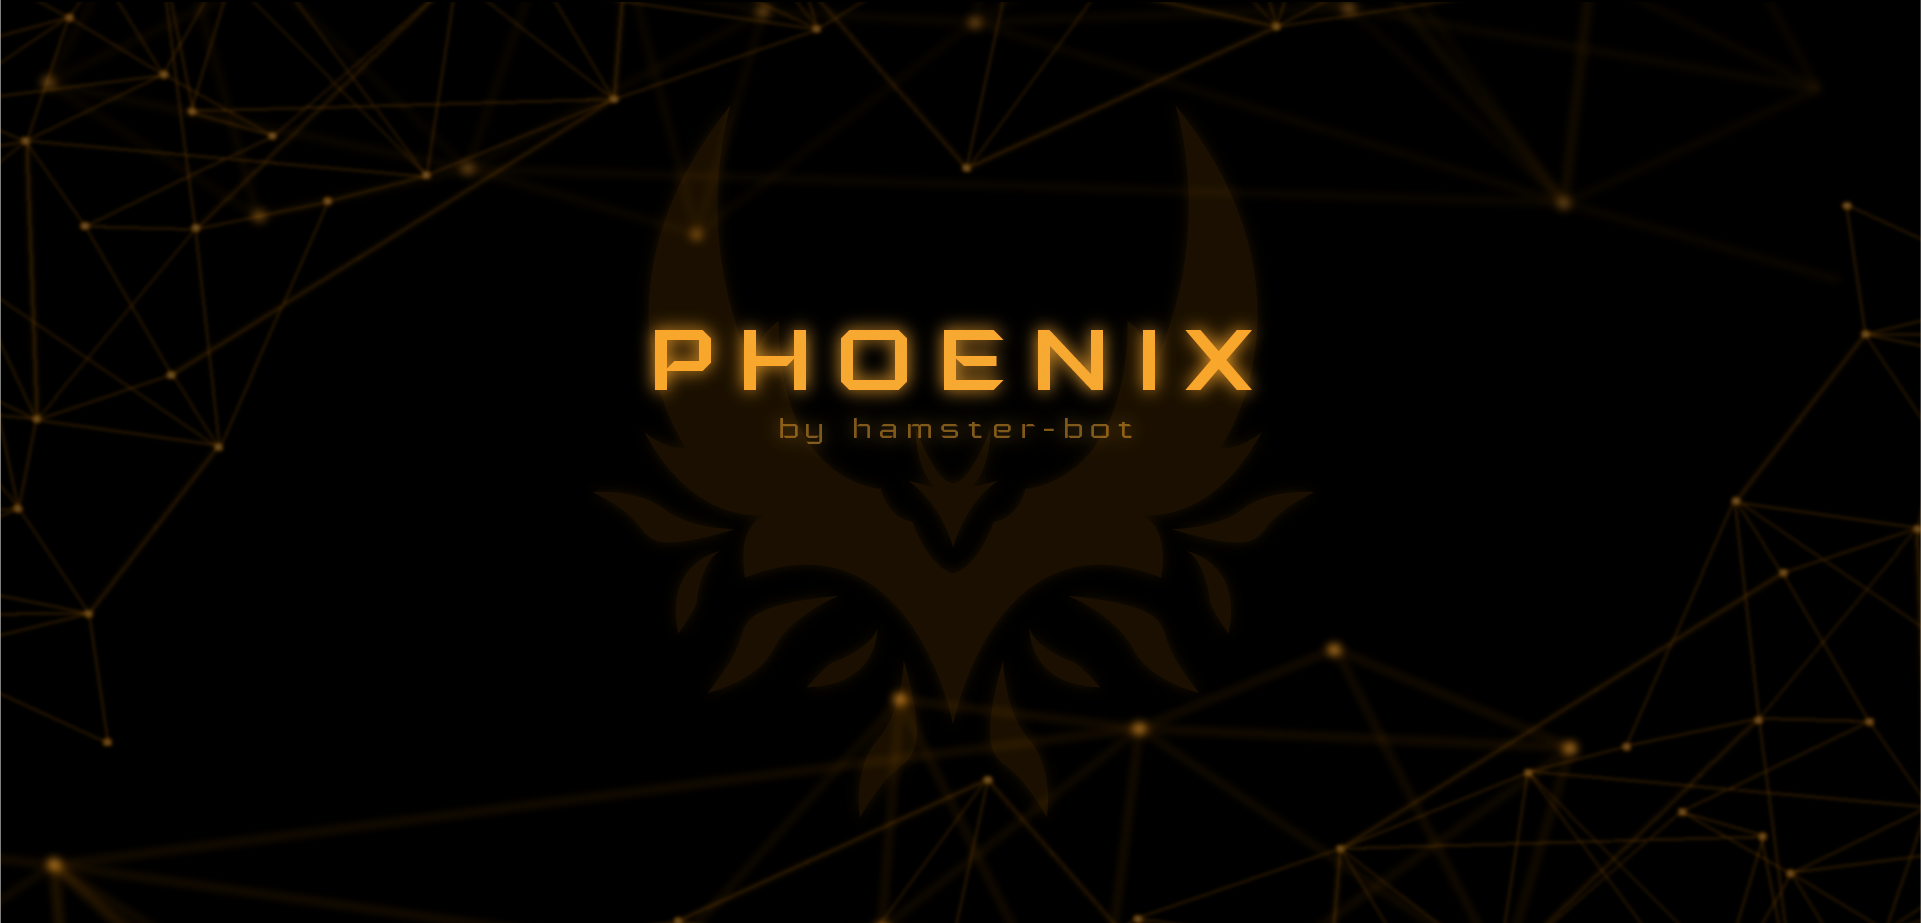 Фонд PHOENIX by hamster-bot - официальный партнер FTX